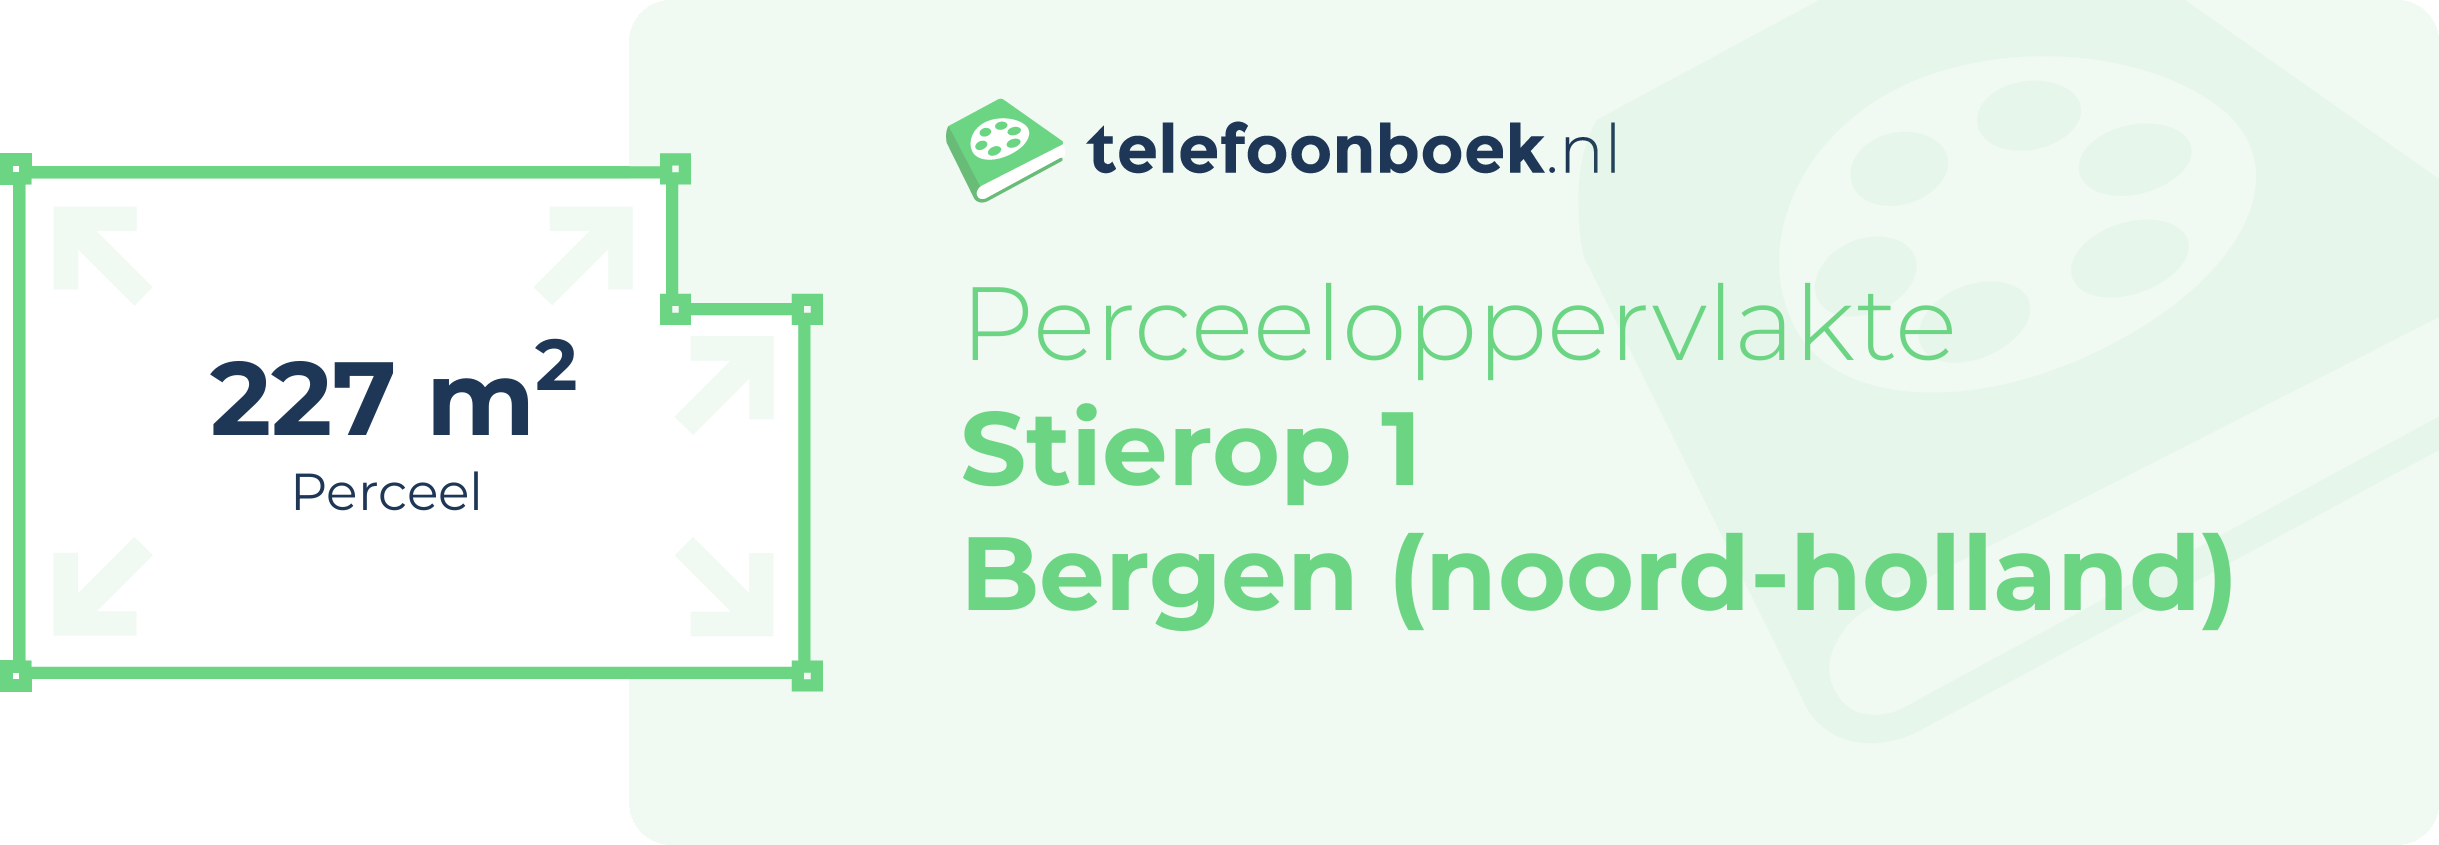 Perceeloppervlakte Stierop 1 Bergen (Noord-Holland)